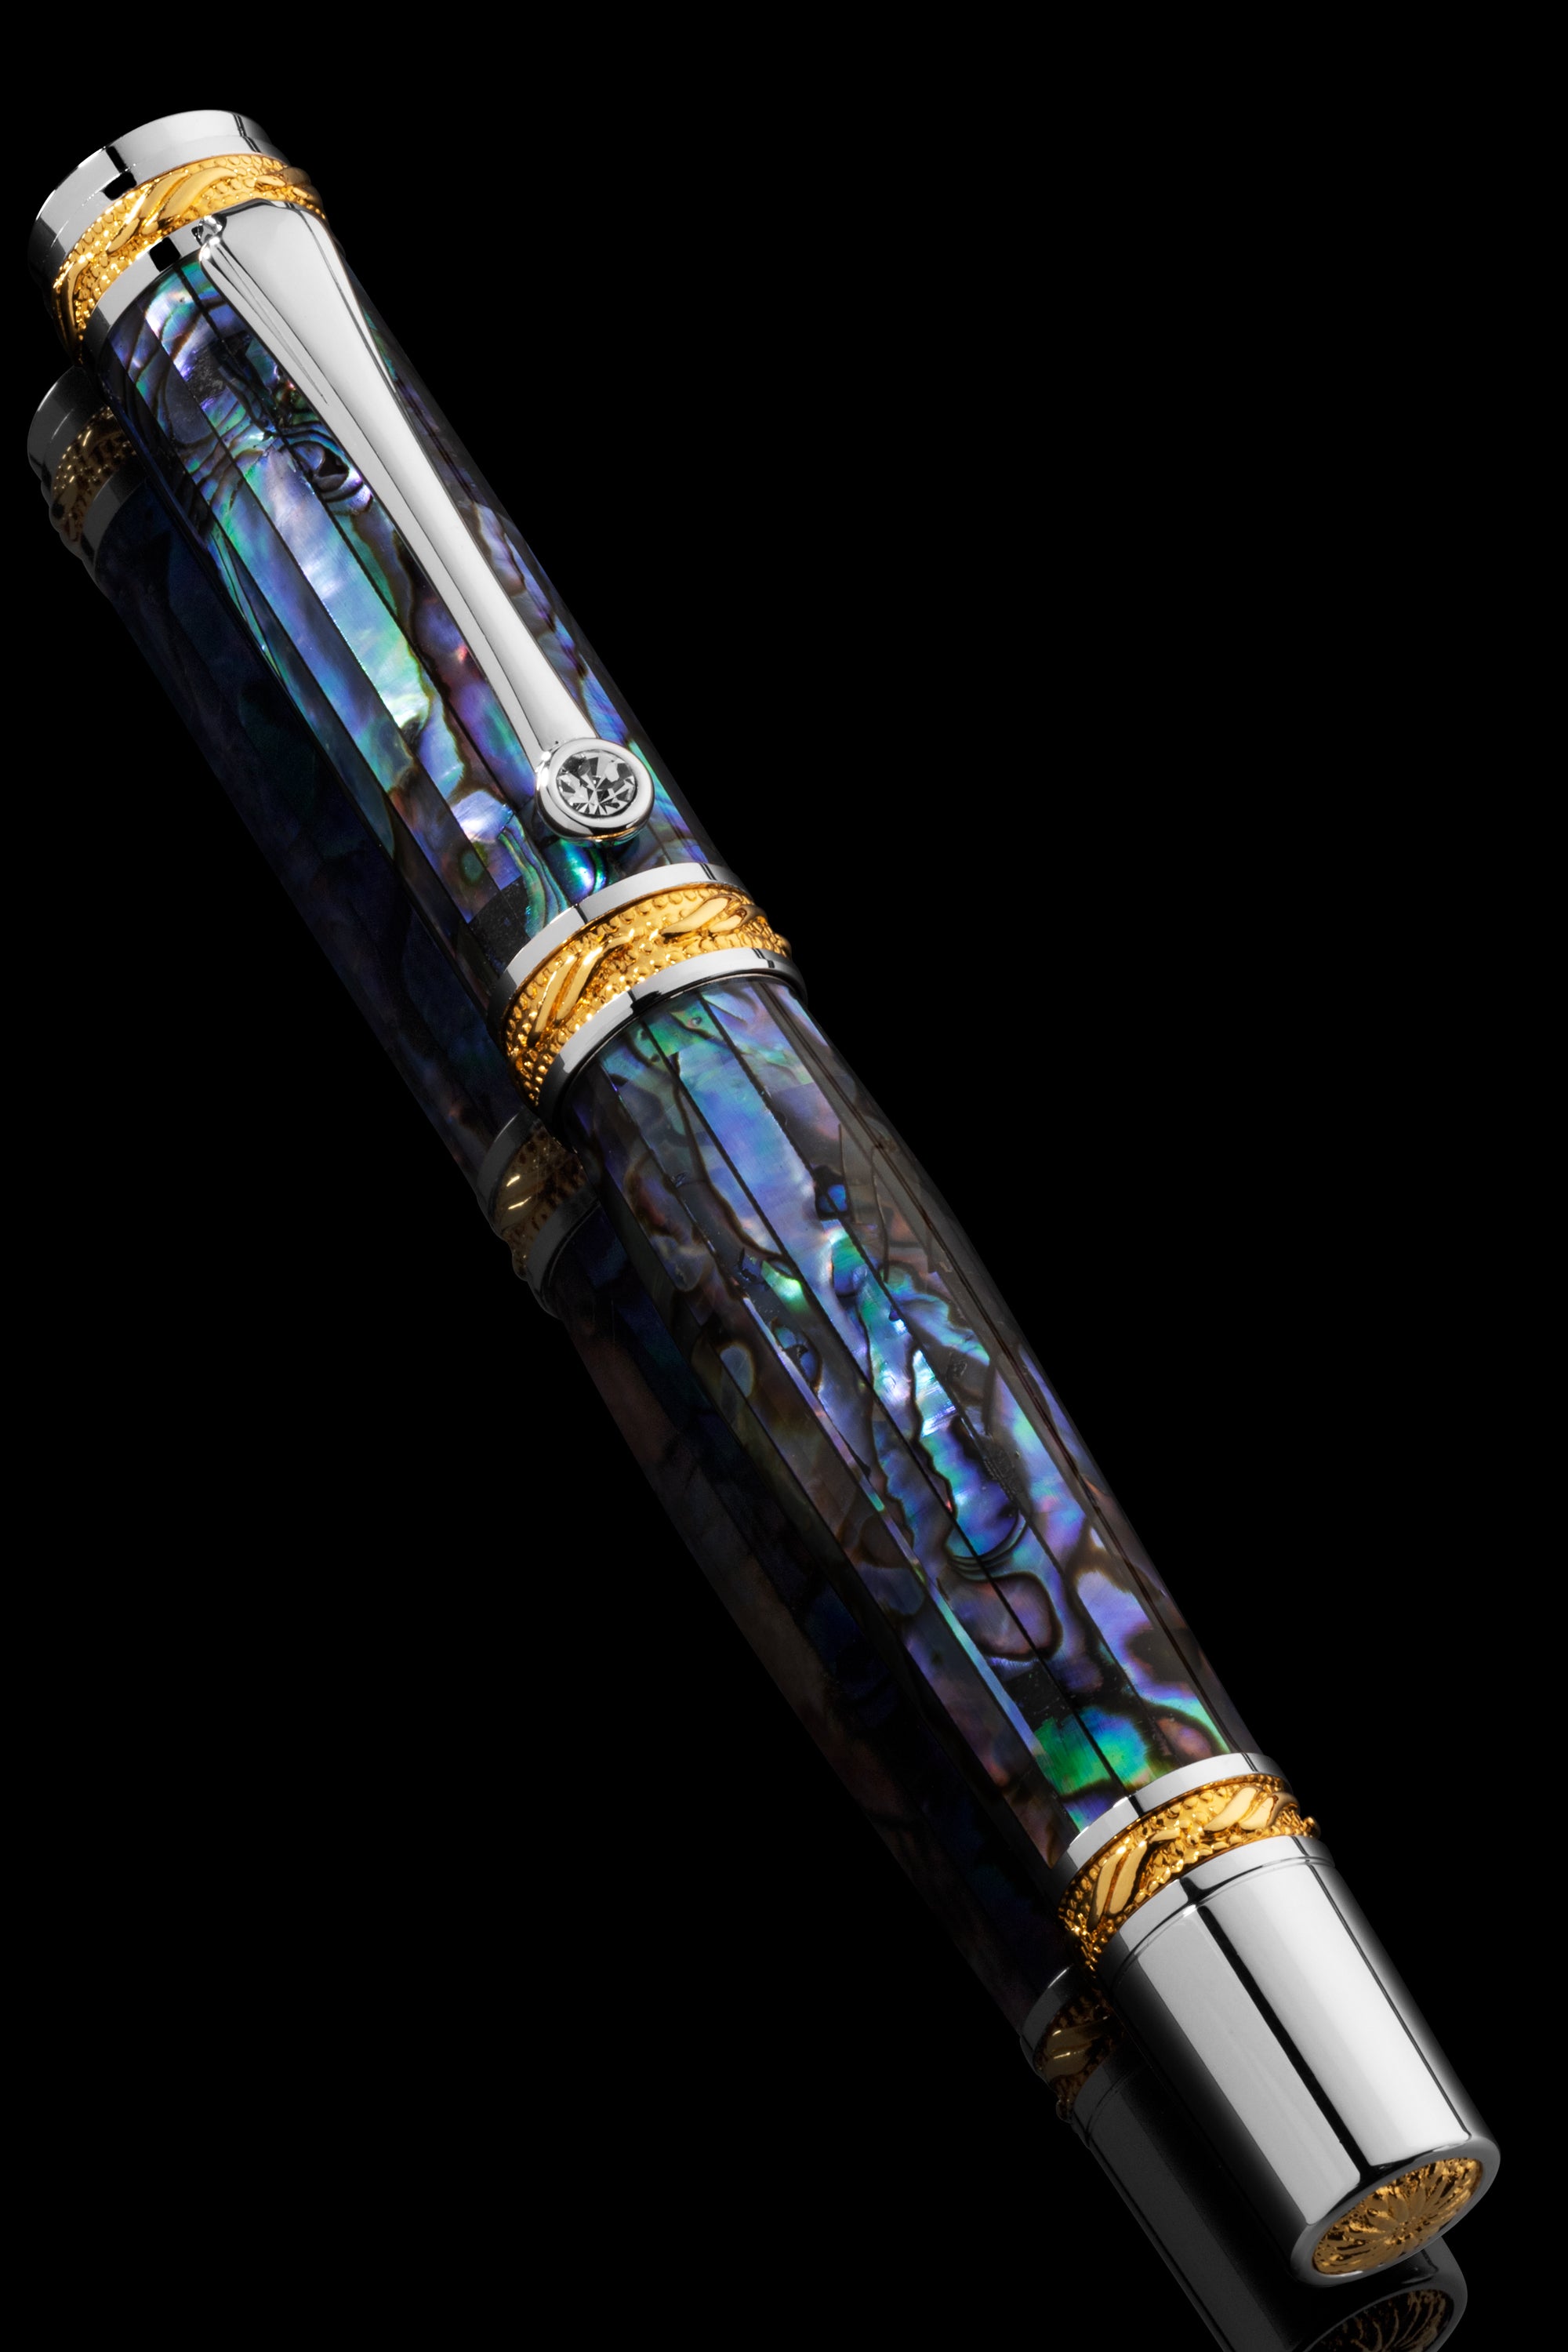 Tycoon Signature Blue Rollerball Pen